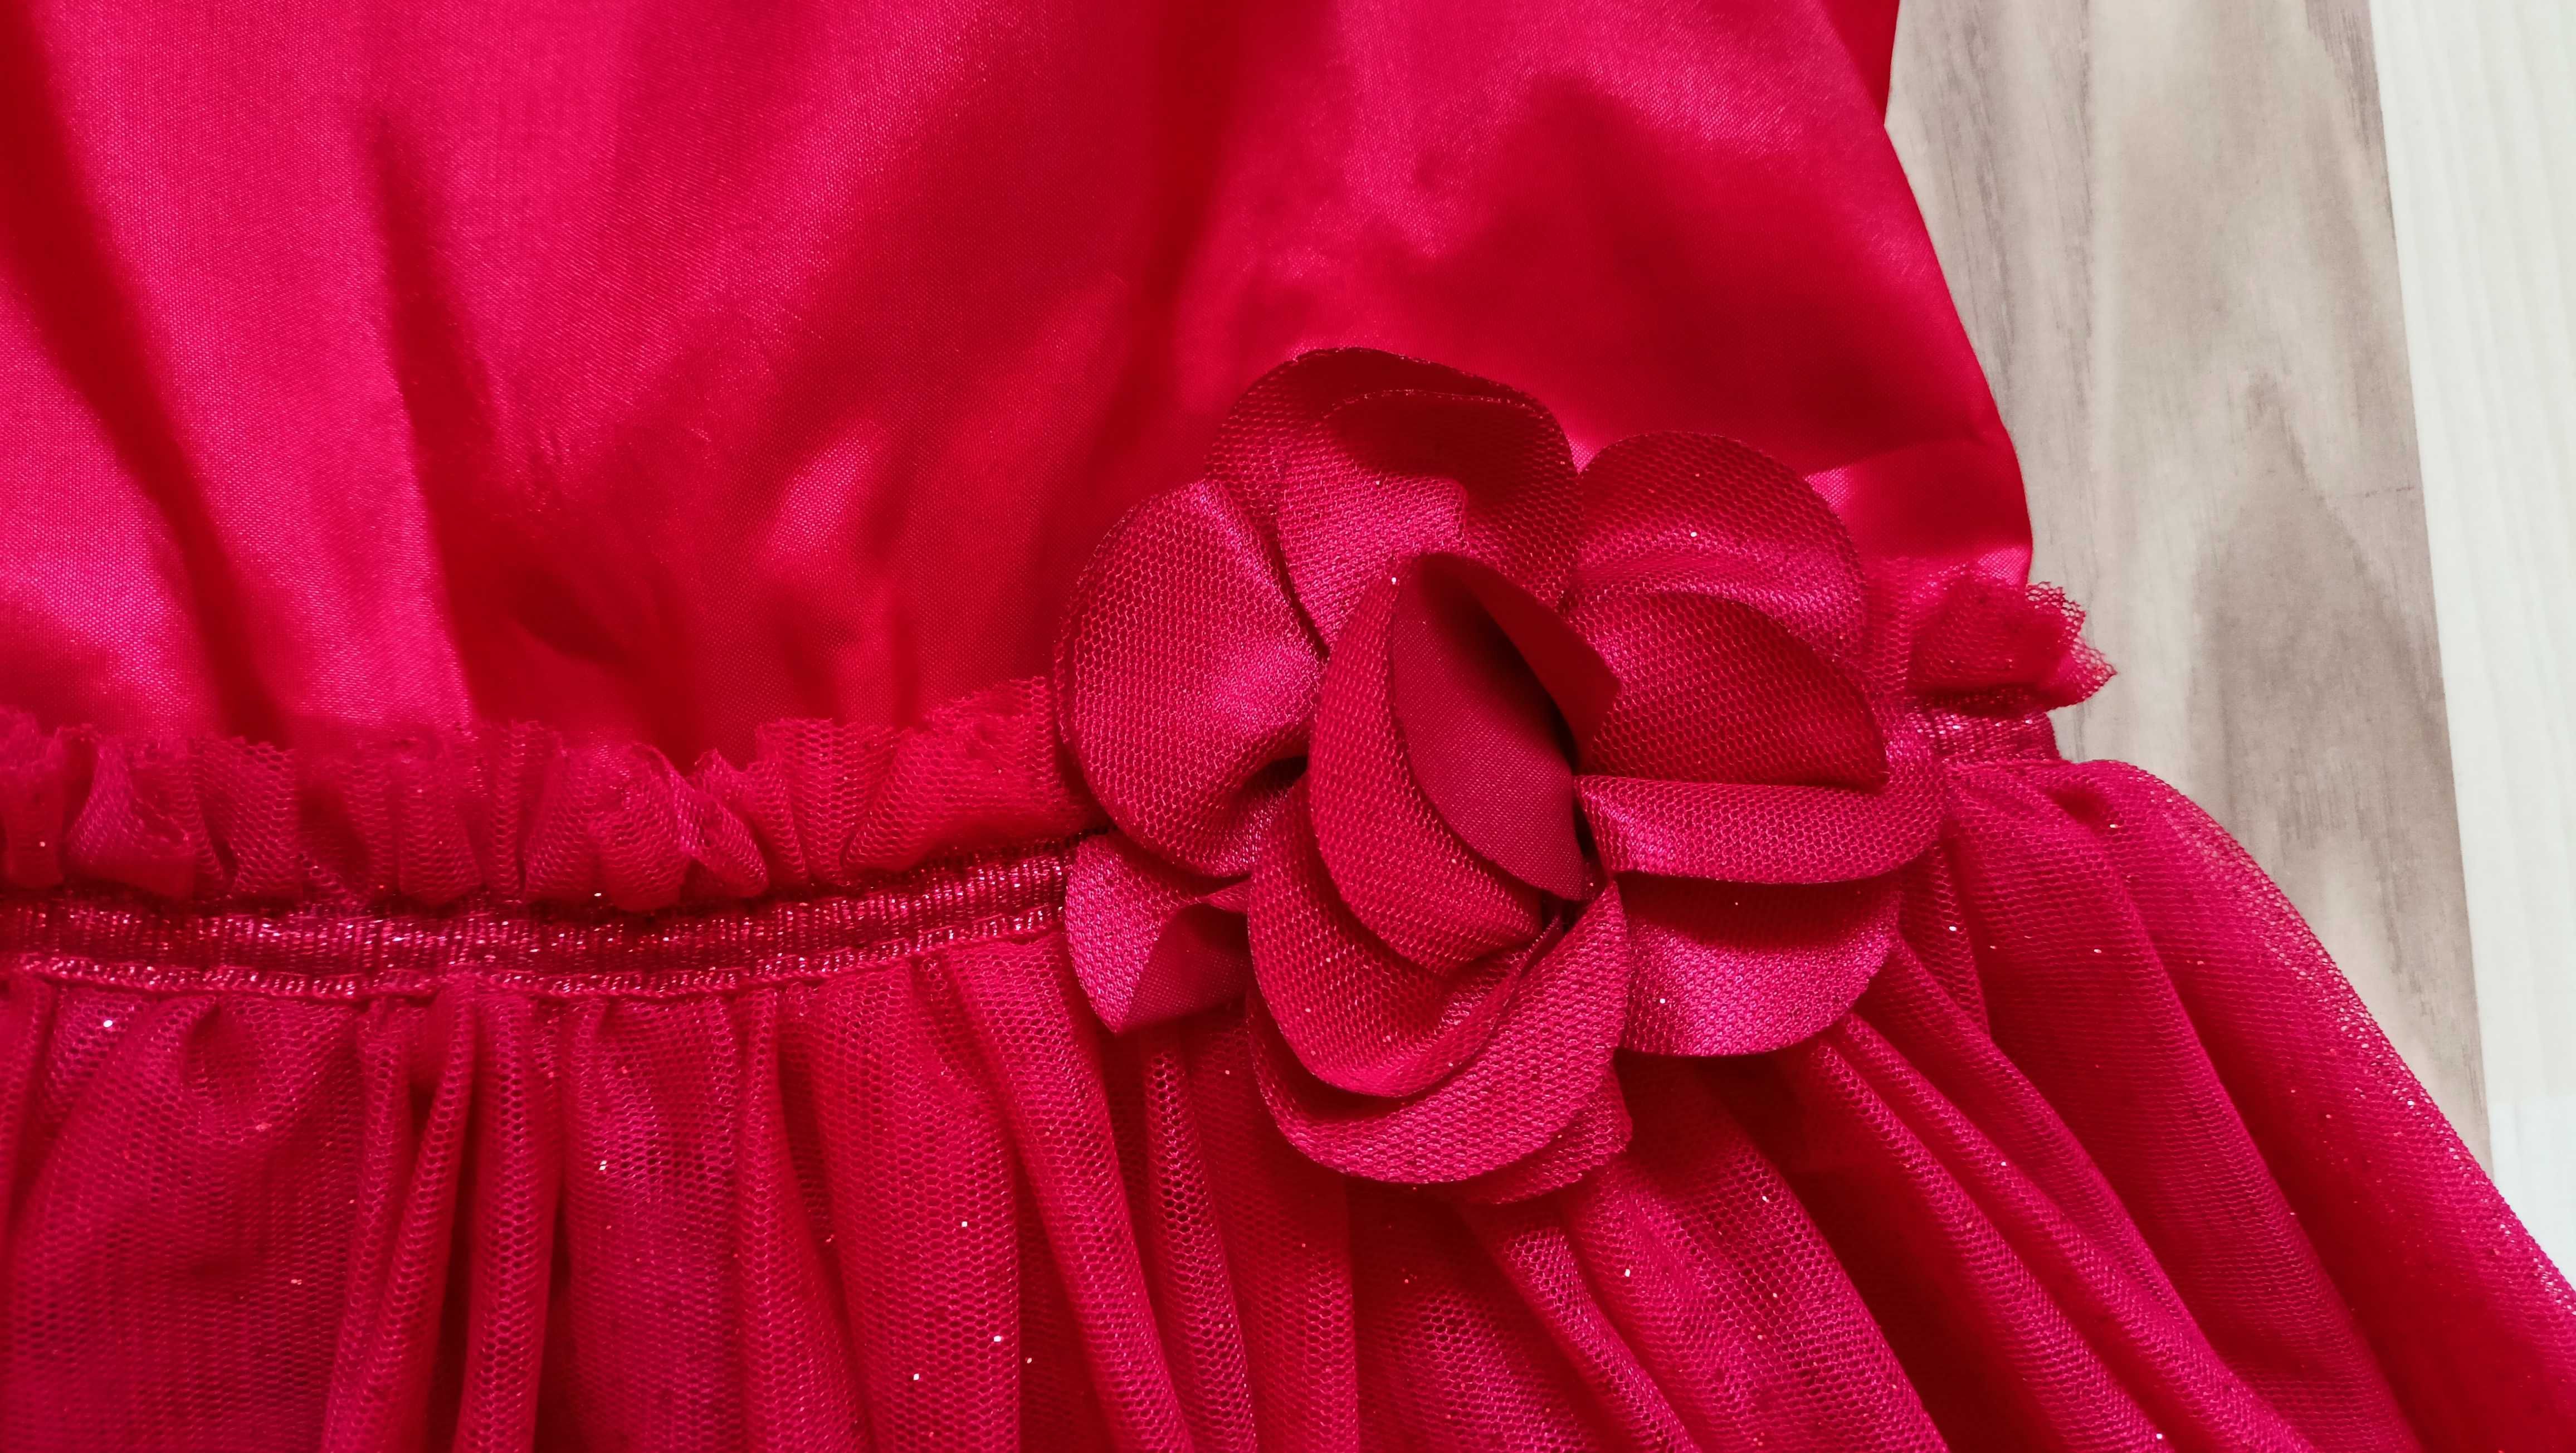 czerwona tiulowa sukienka h and a 128/134